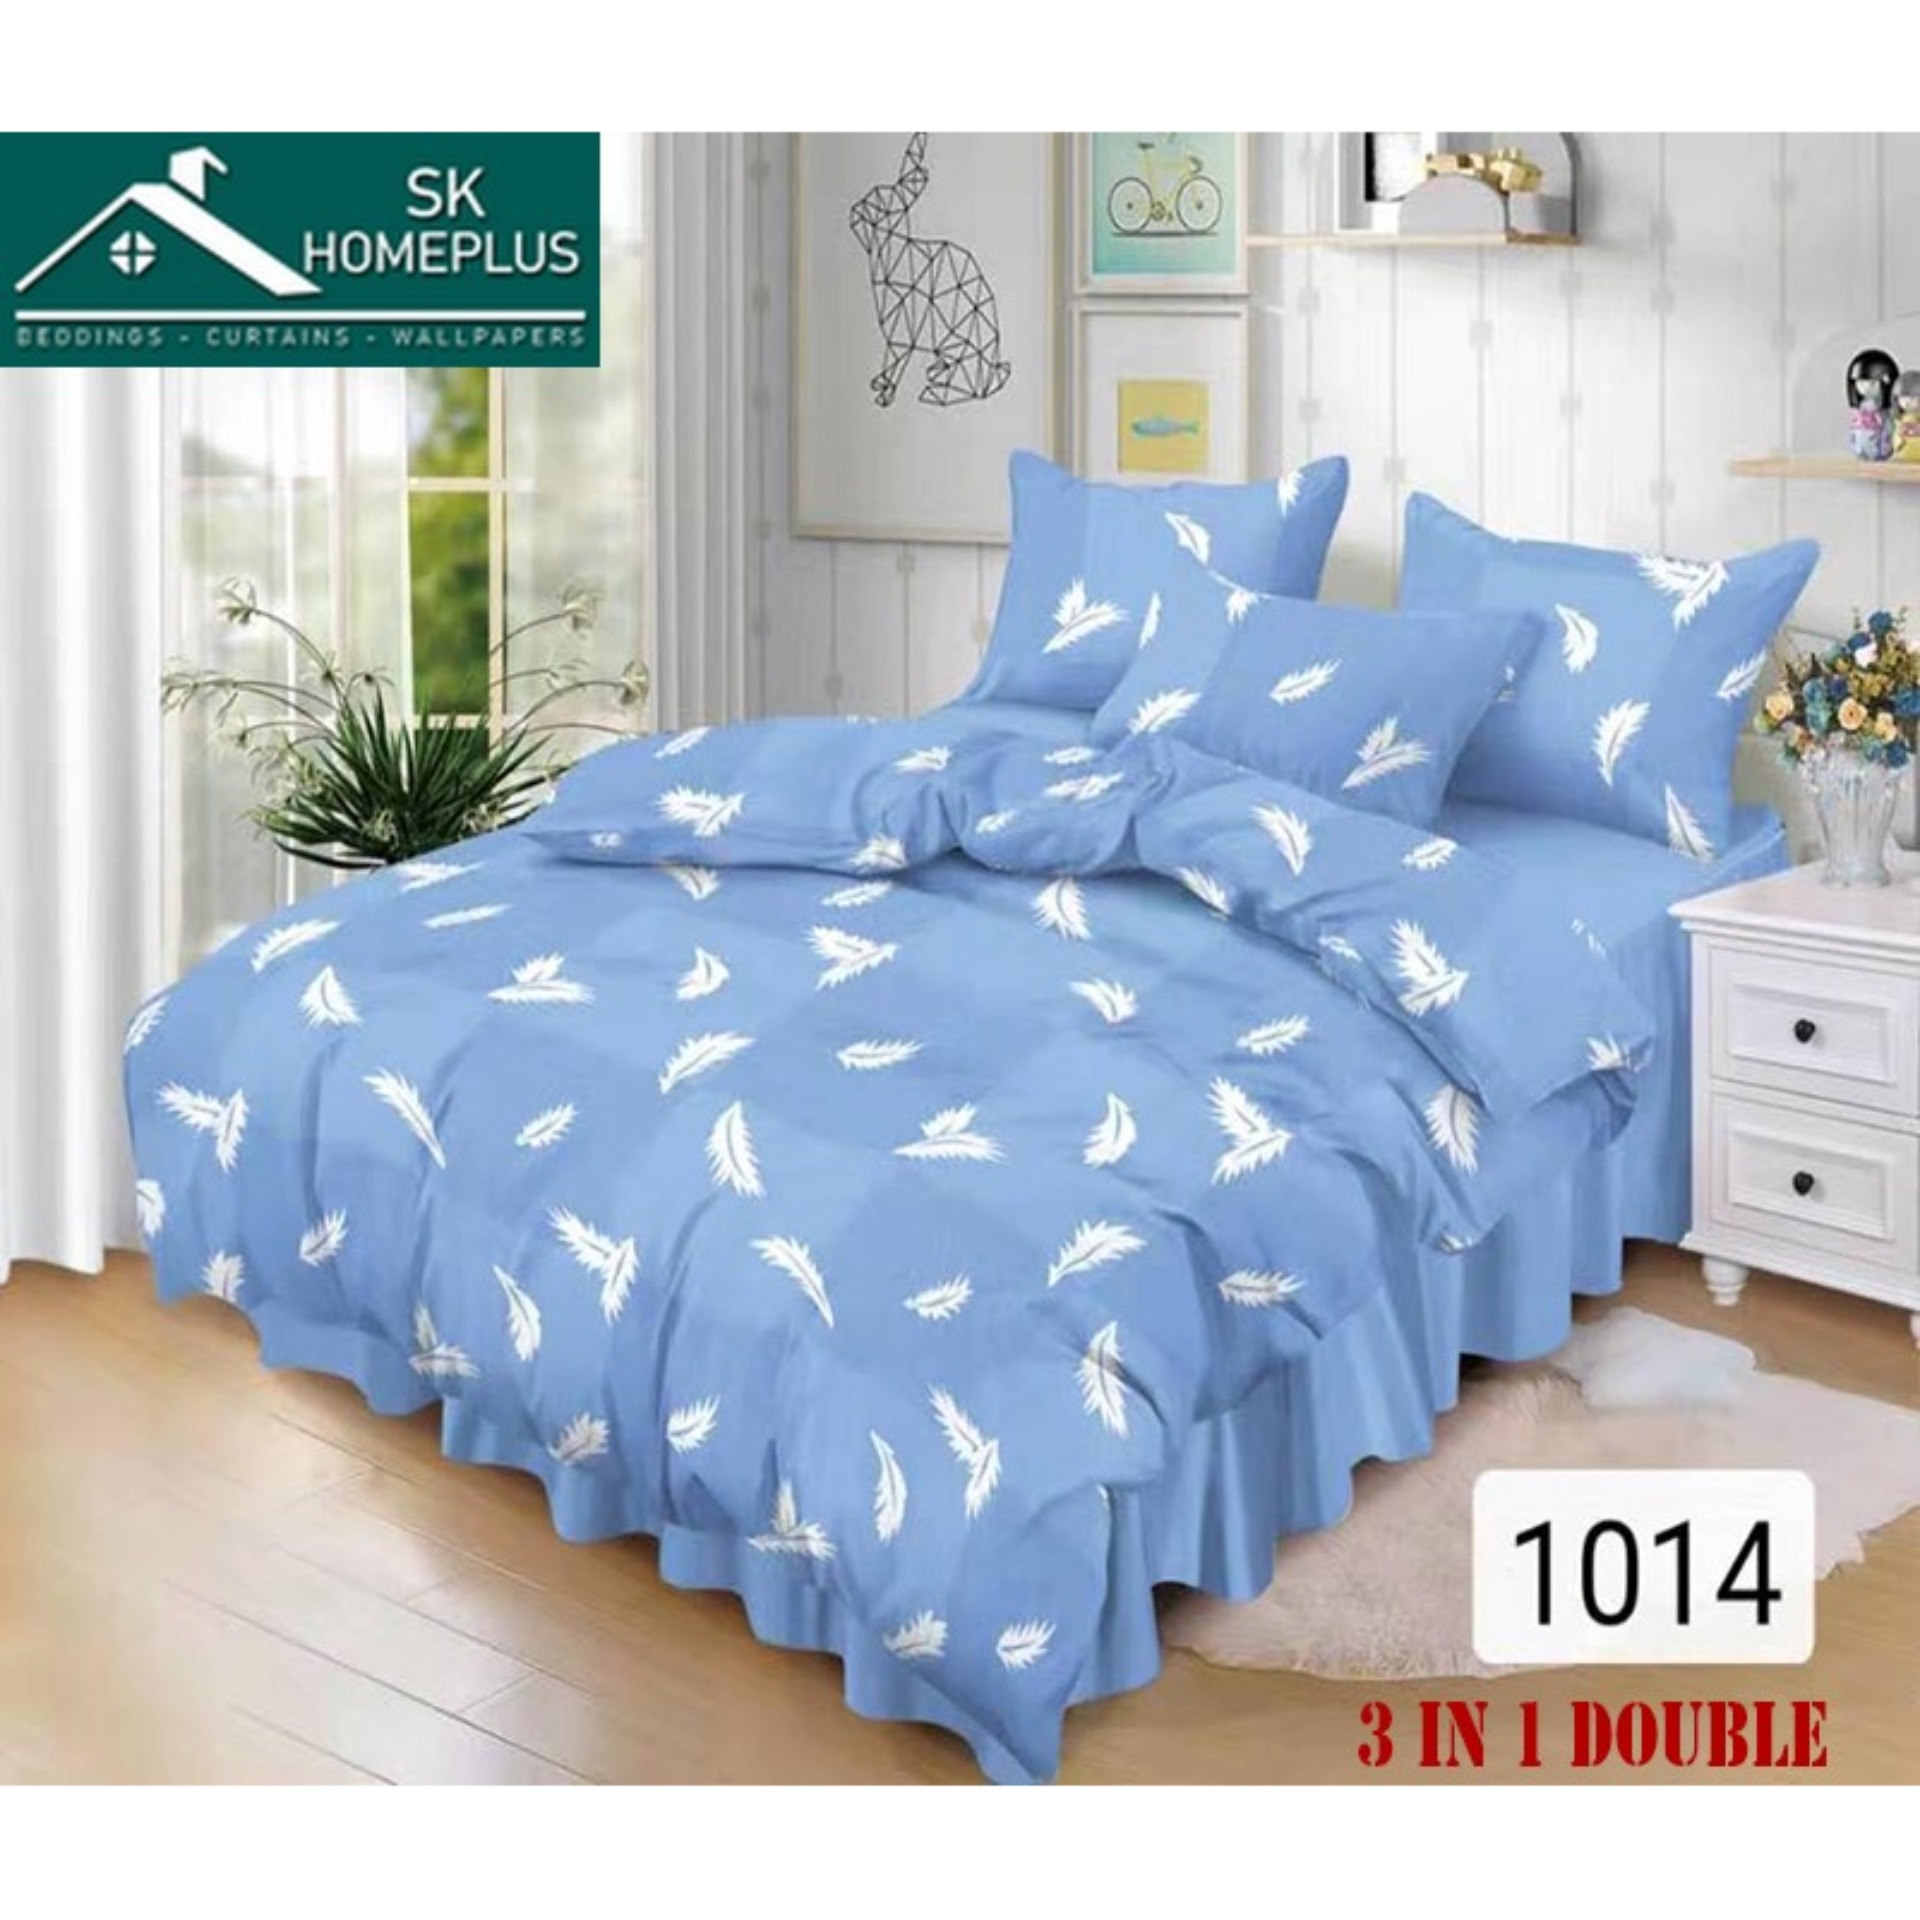 Sk Homeplus 3 In 1 Double 54 X75 Cotton Bed Sheet Set Premium